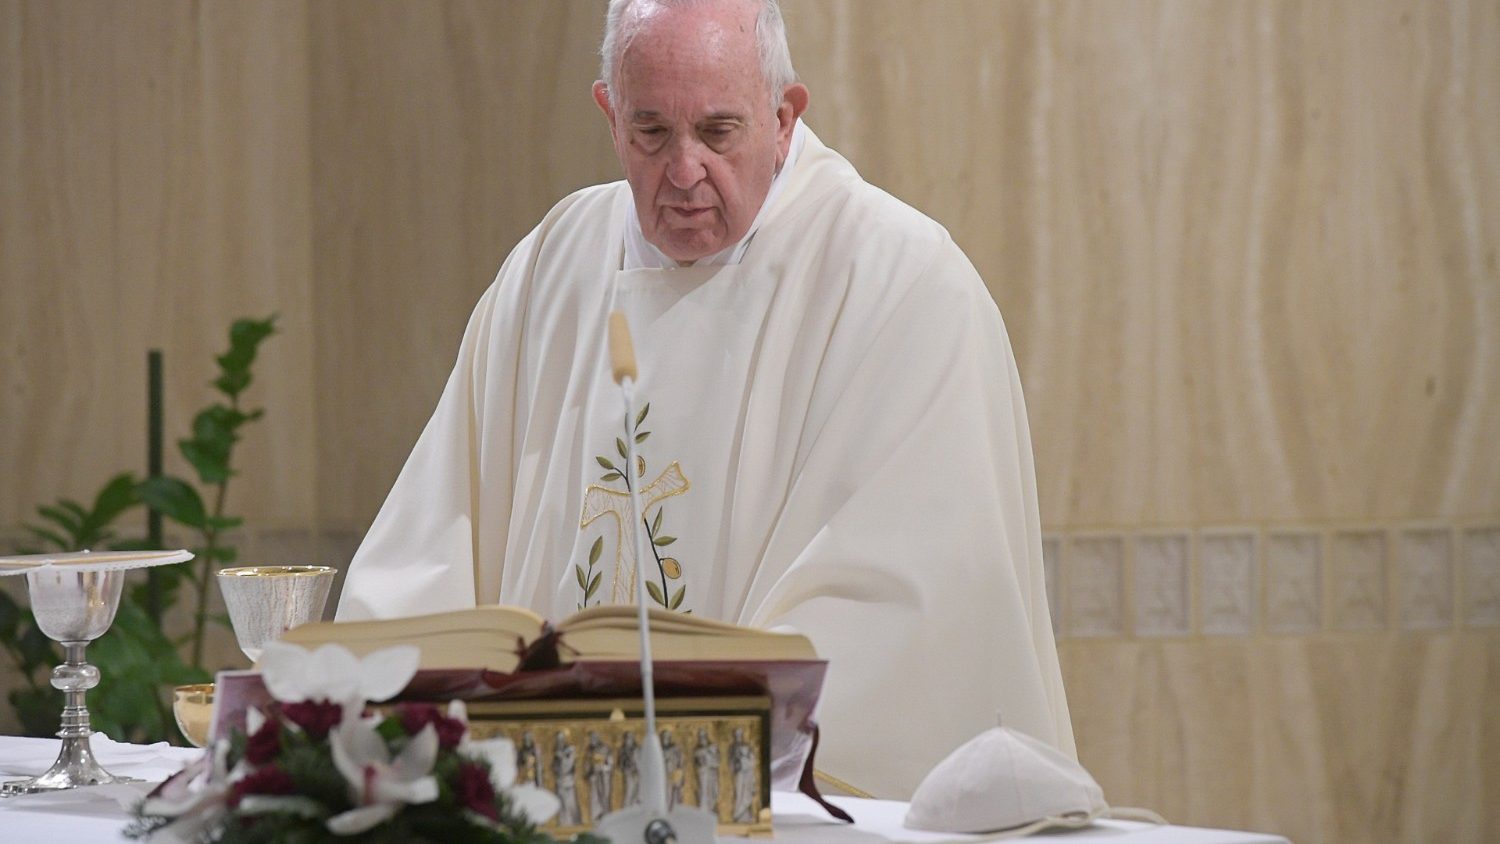 Homilía del Santo Padre: “Hoy la Iglesia elogia la pequeñez” - Vatican News